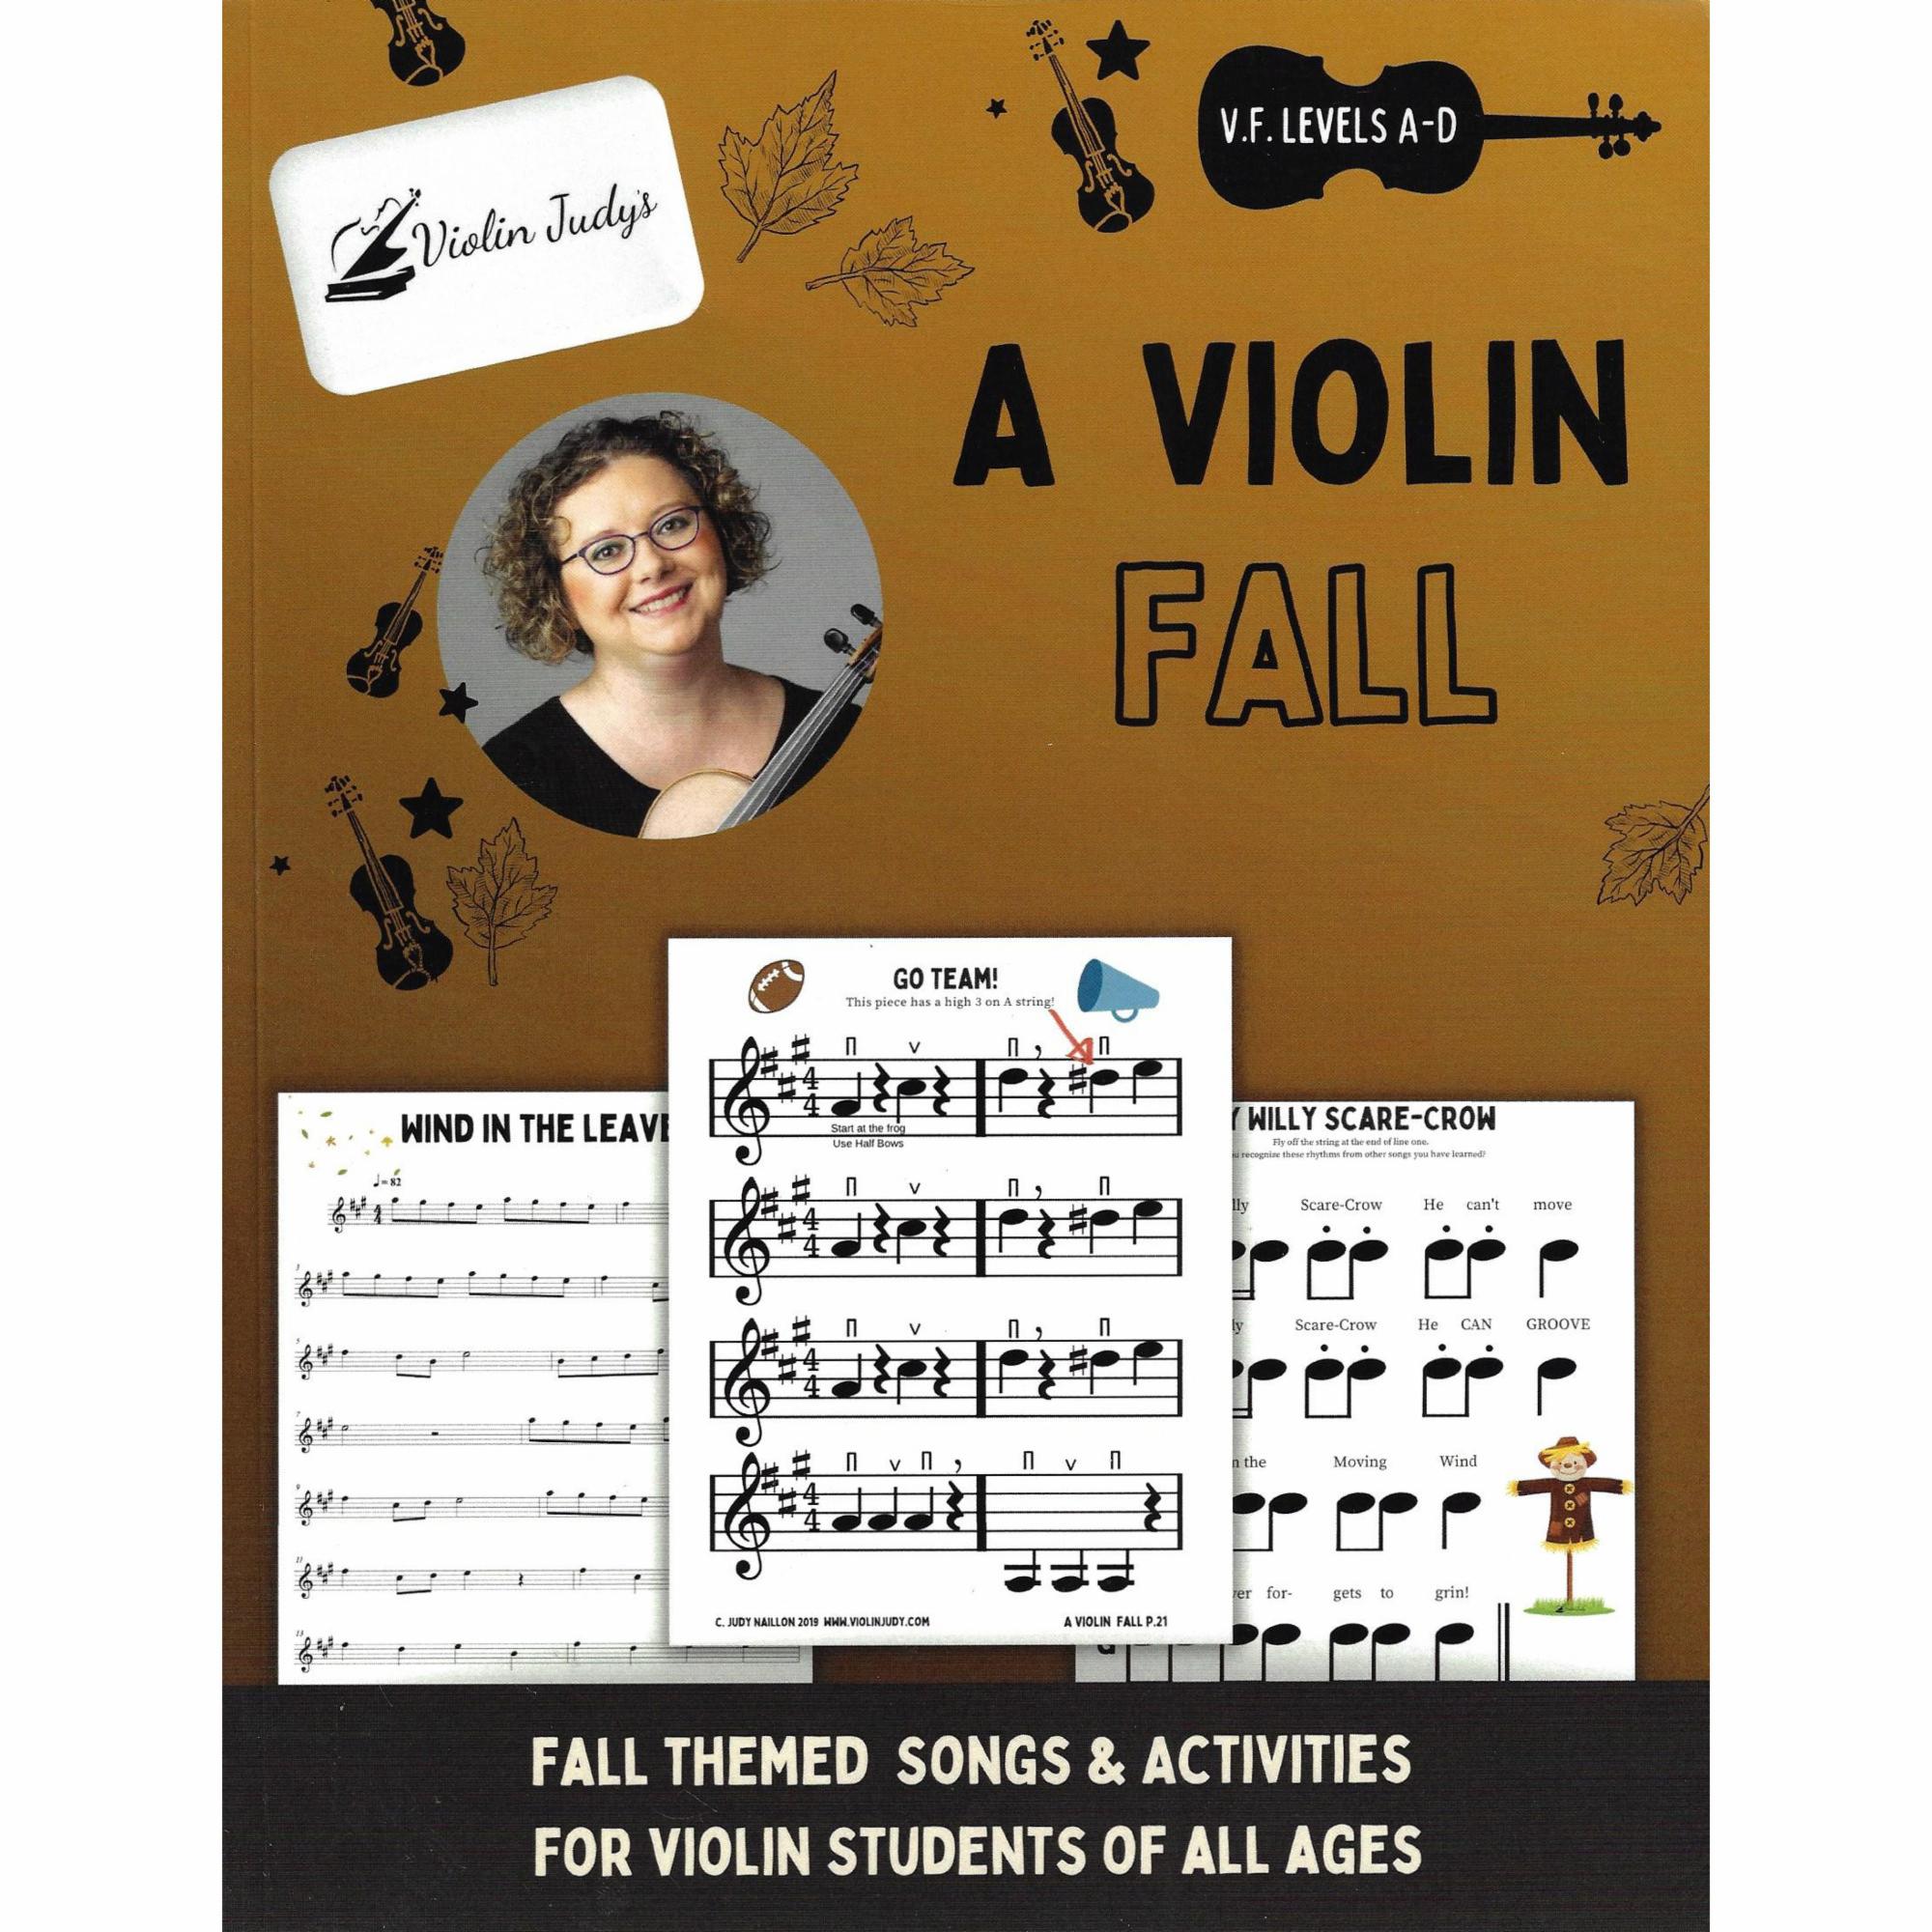 Violin Judy's A Violin Fall